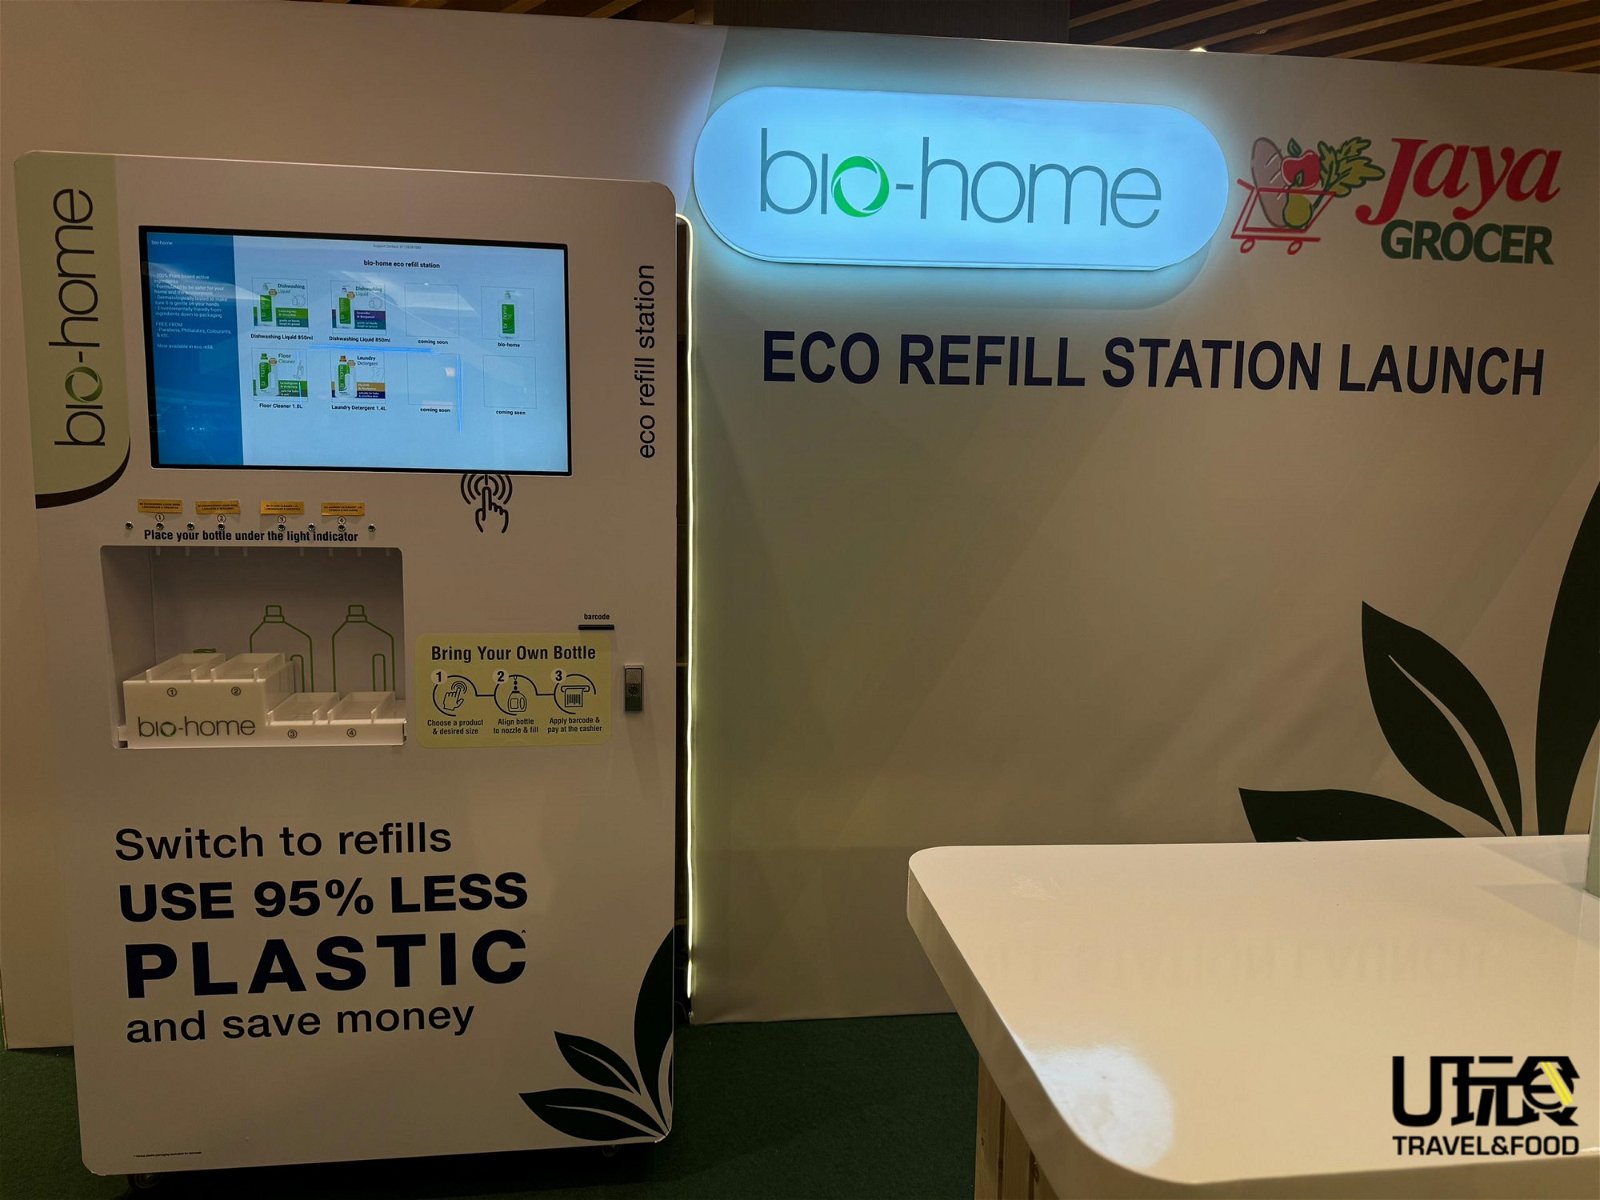 bio-home首个环保补充站目前已正式入驻白沙罗上城星椋广场（Starling Mall ）Jaya Grocer连锁超，民众前来体验及响应环保。